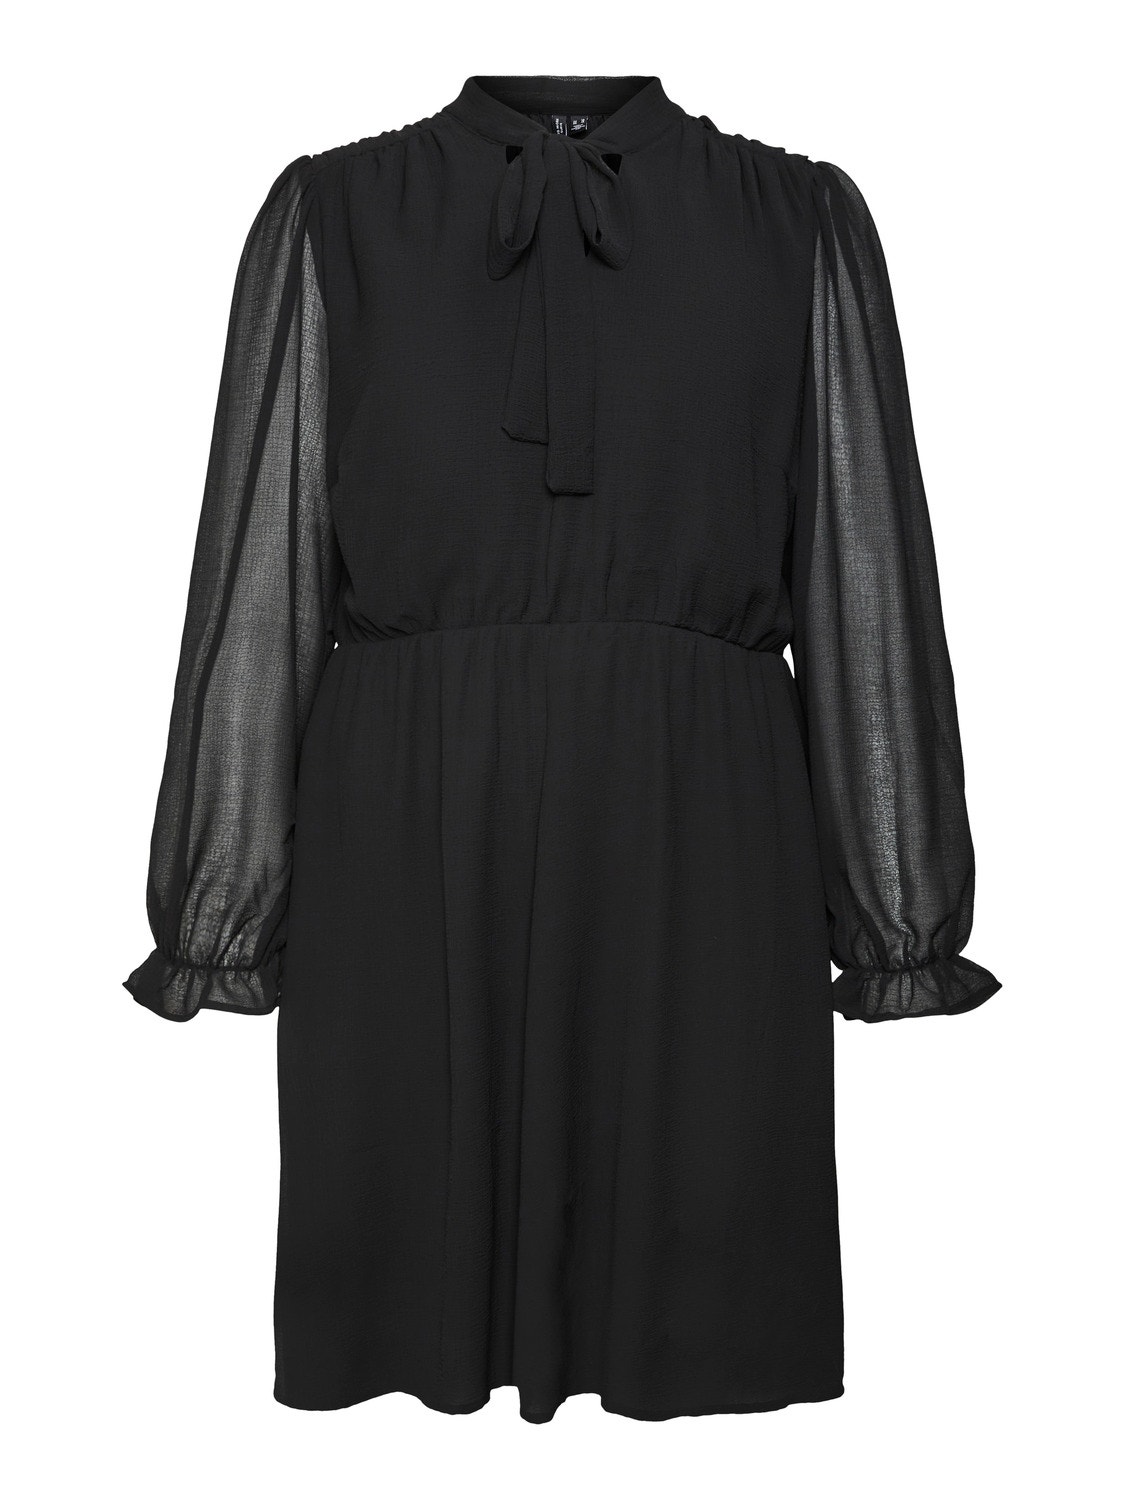 Vero Moda VMVIGGA Short dress -Black - 10305832